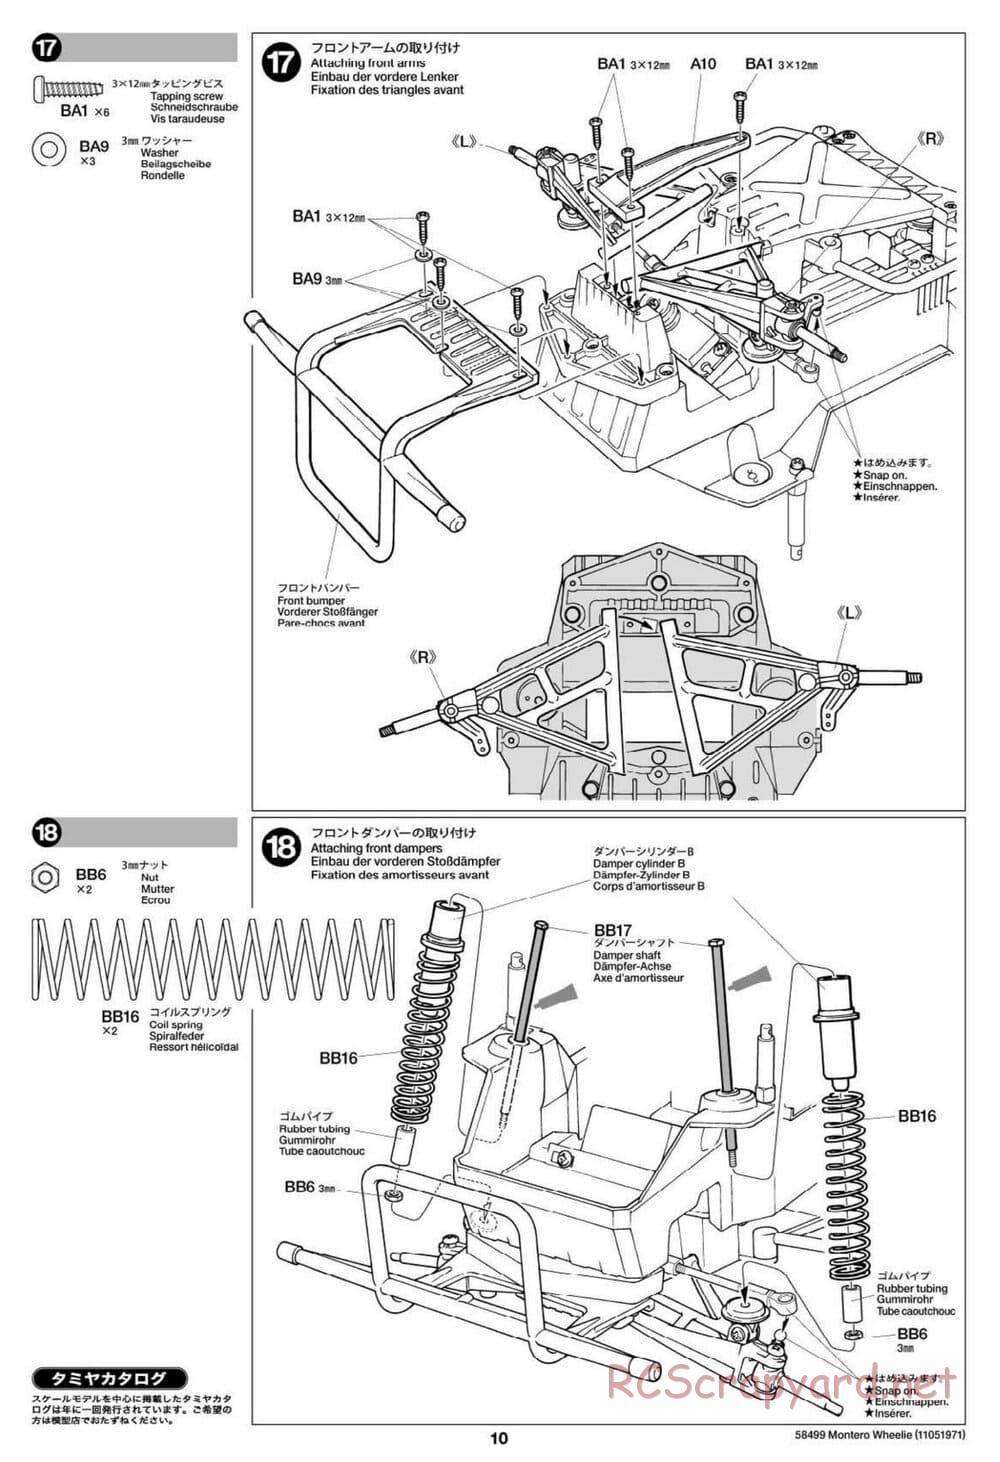 Tamiya - Mitsubishi Montero Wheelie - CW-01 Chassis - Manual - Page 10